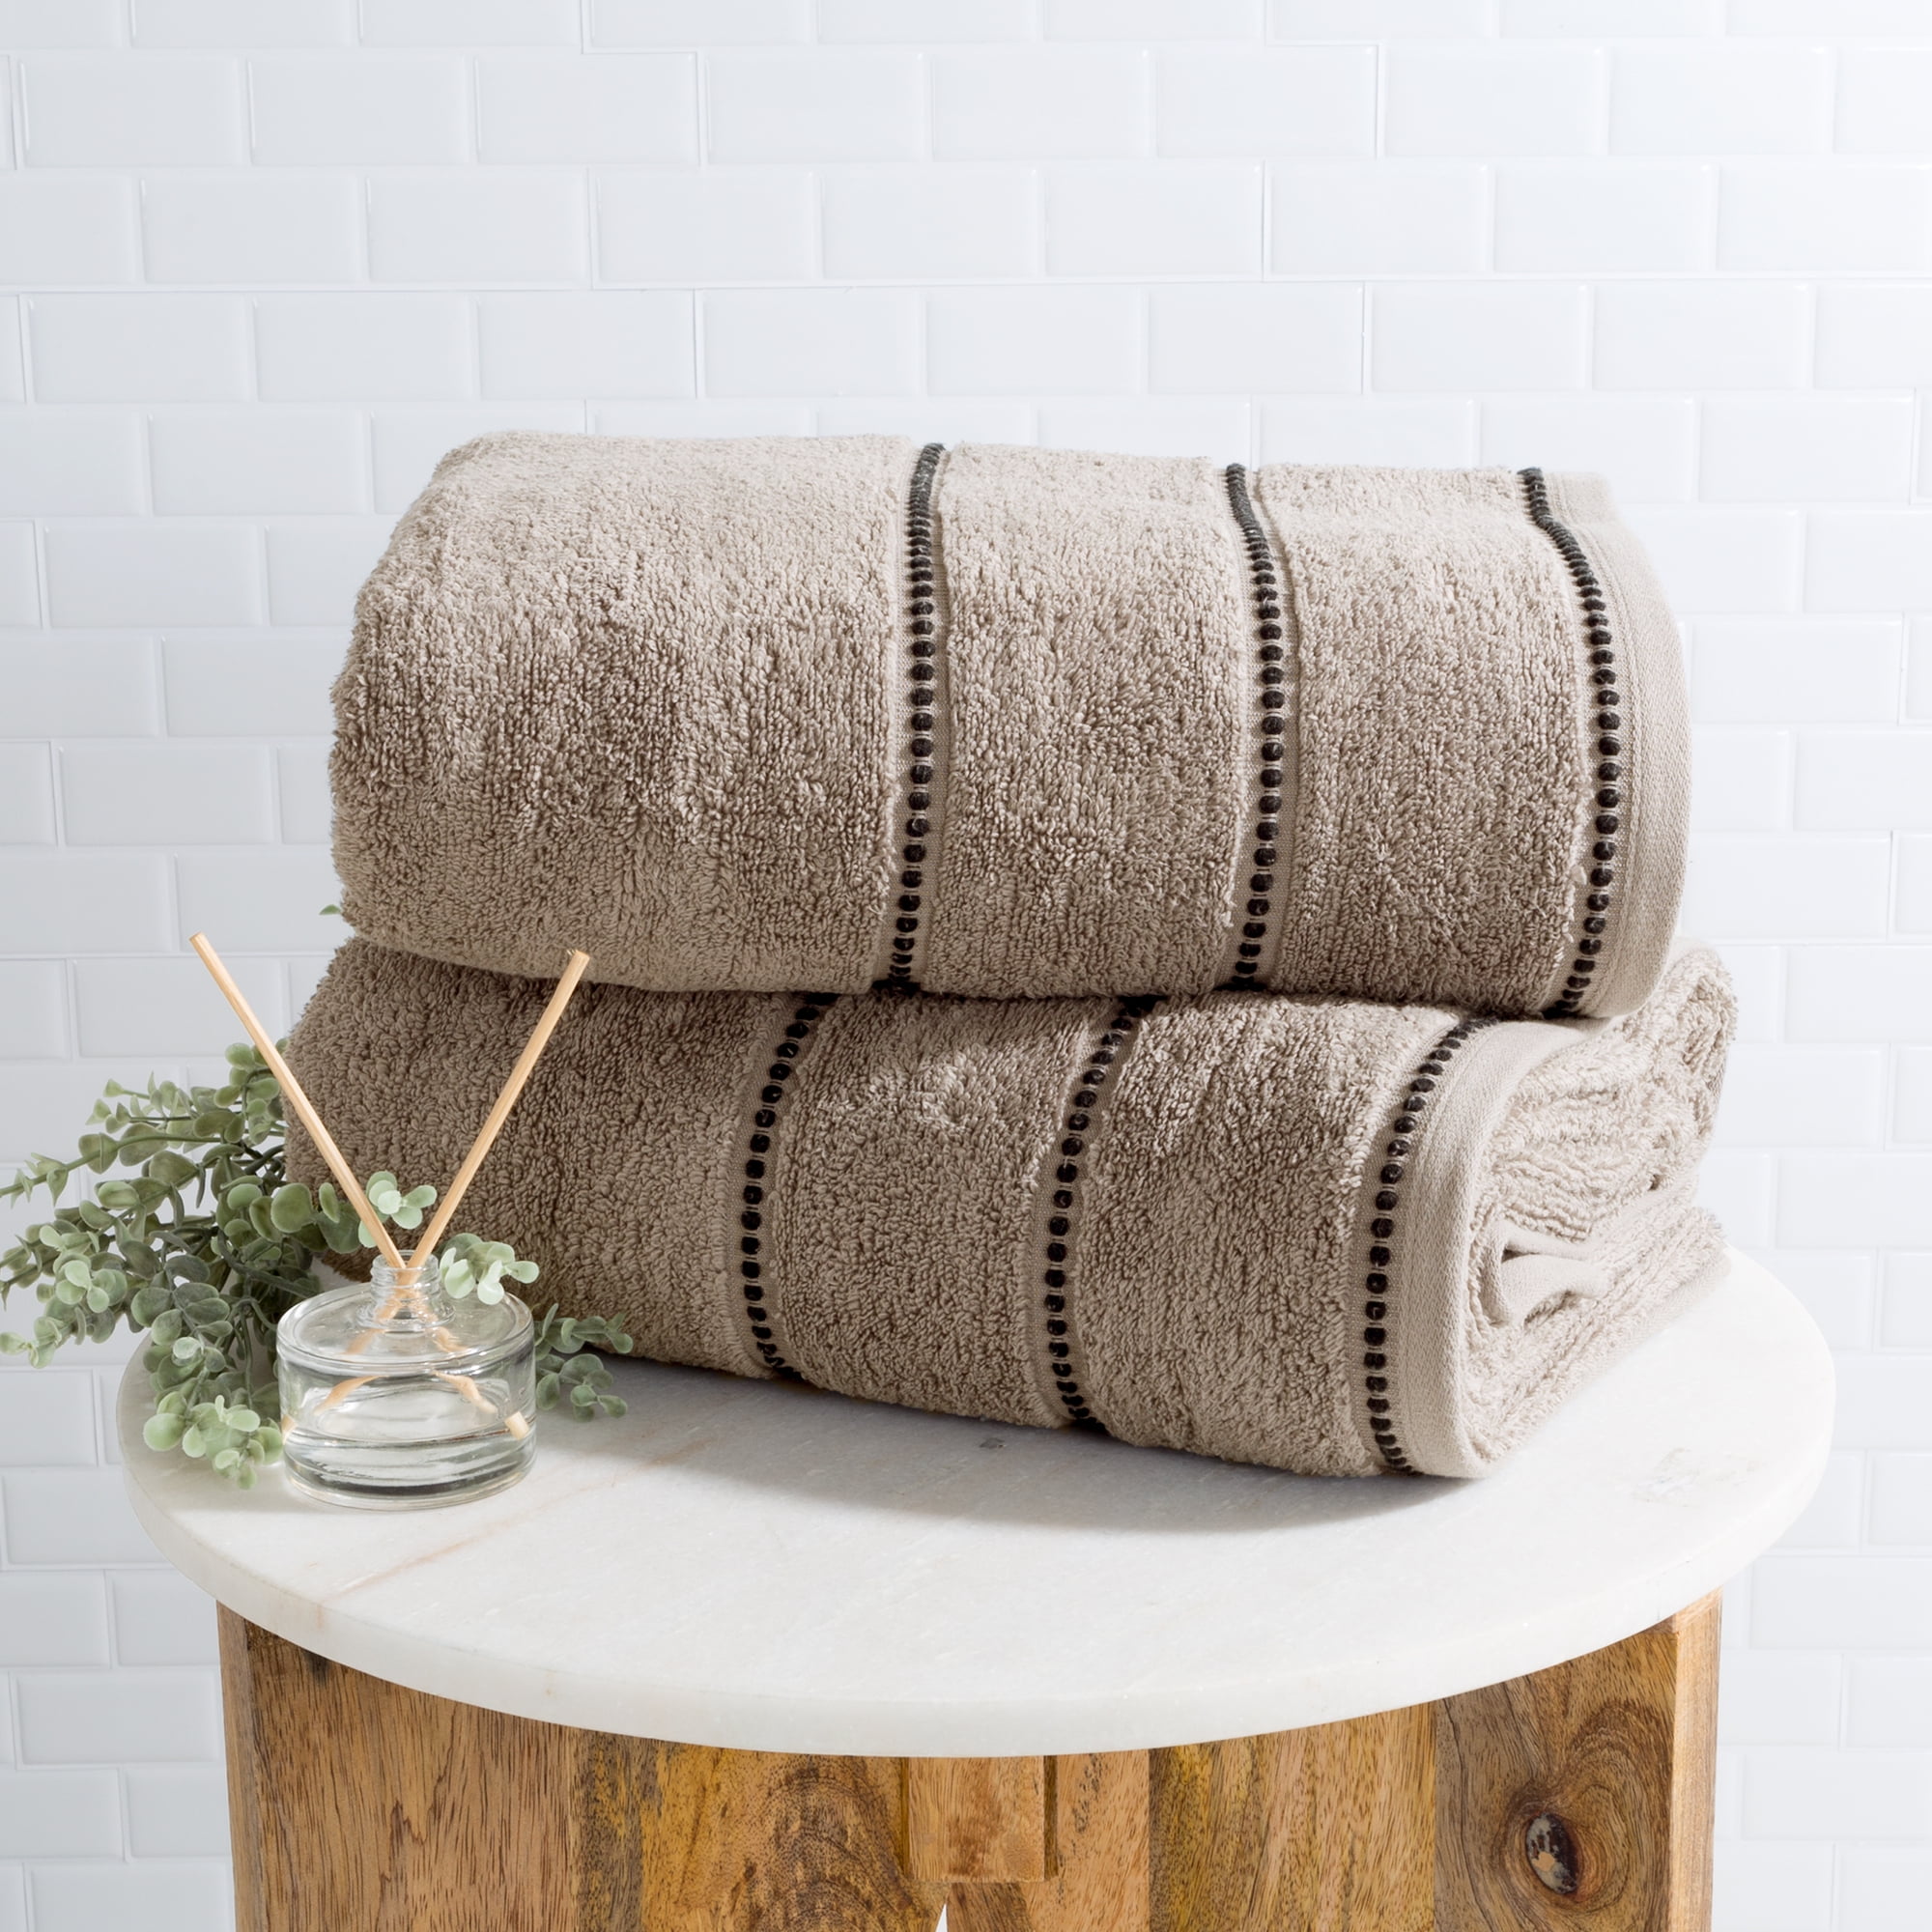  Lavish Home 100 Percent Cotton Towel Set, Zero Twist, Soft and  Absorbent 6 Piece Set With 2 Bath Towels, 2 Hand Towels and 2 Washcloths  (Brick) : Home & Kitchen